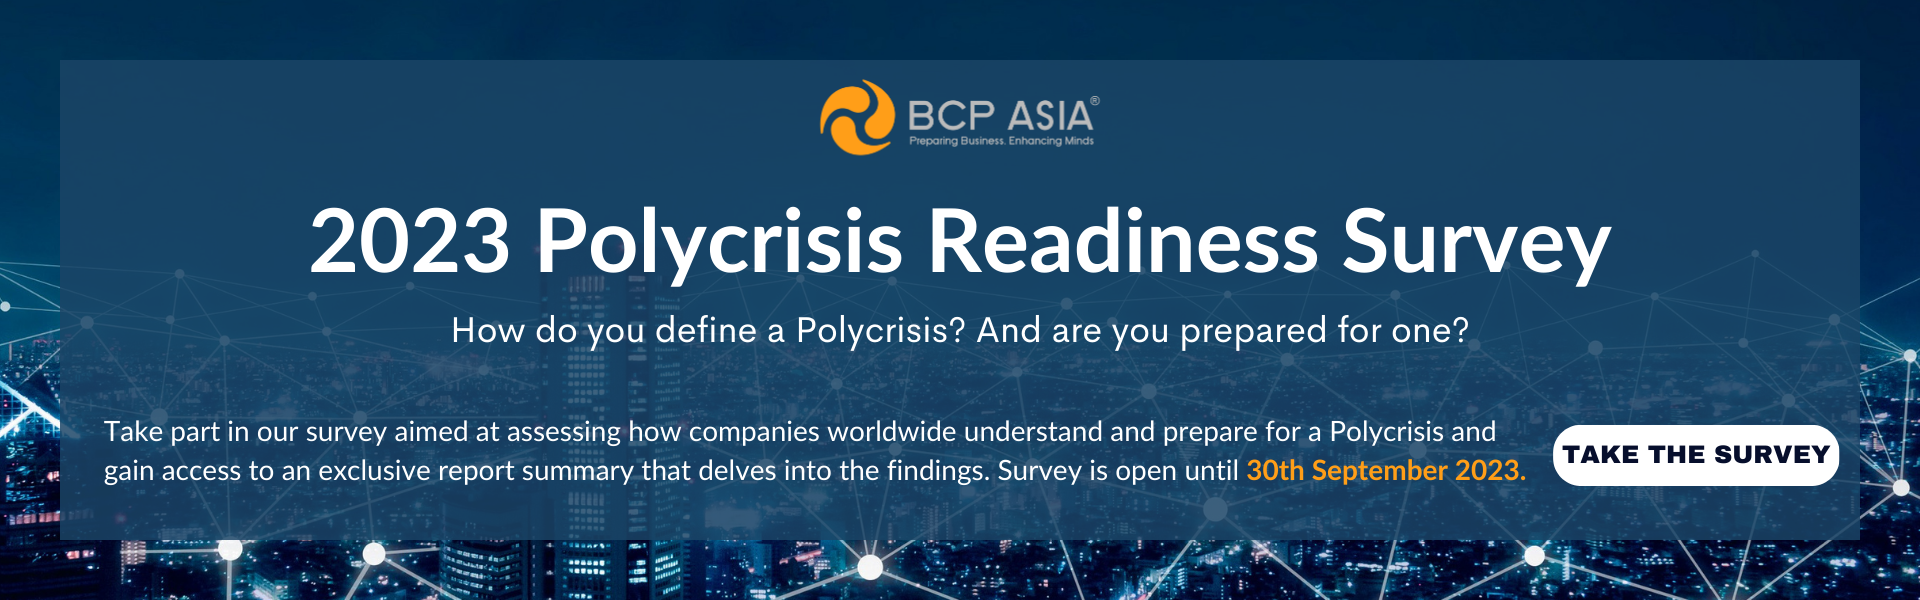 2023 Polycrisis Readiness Survey